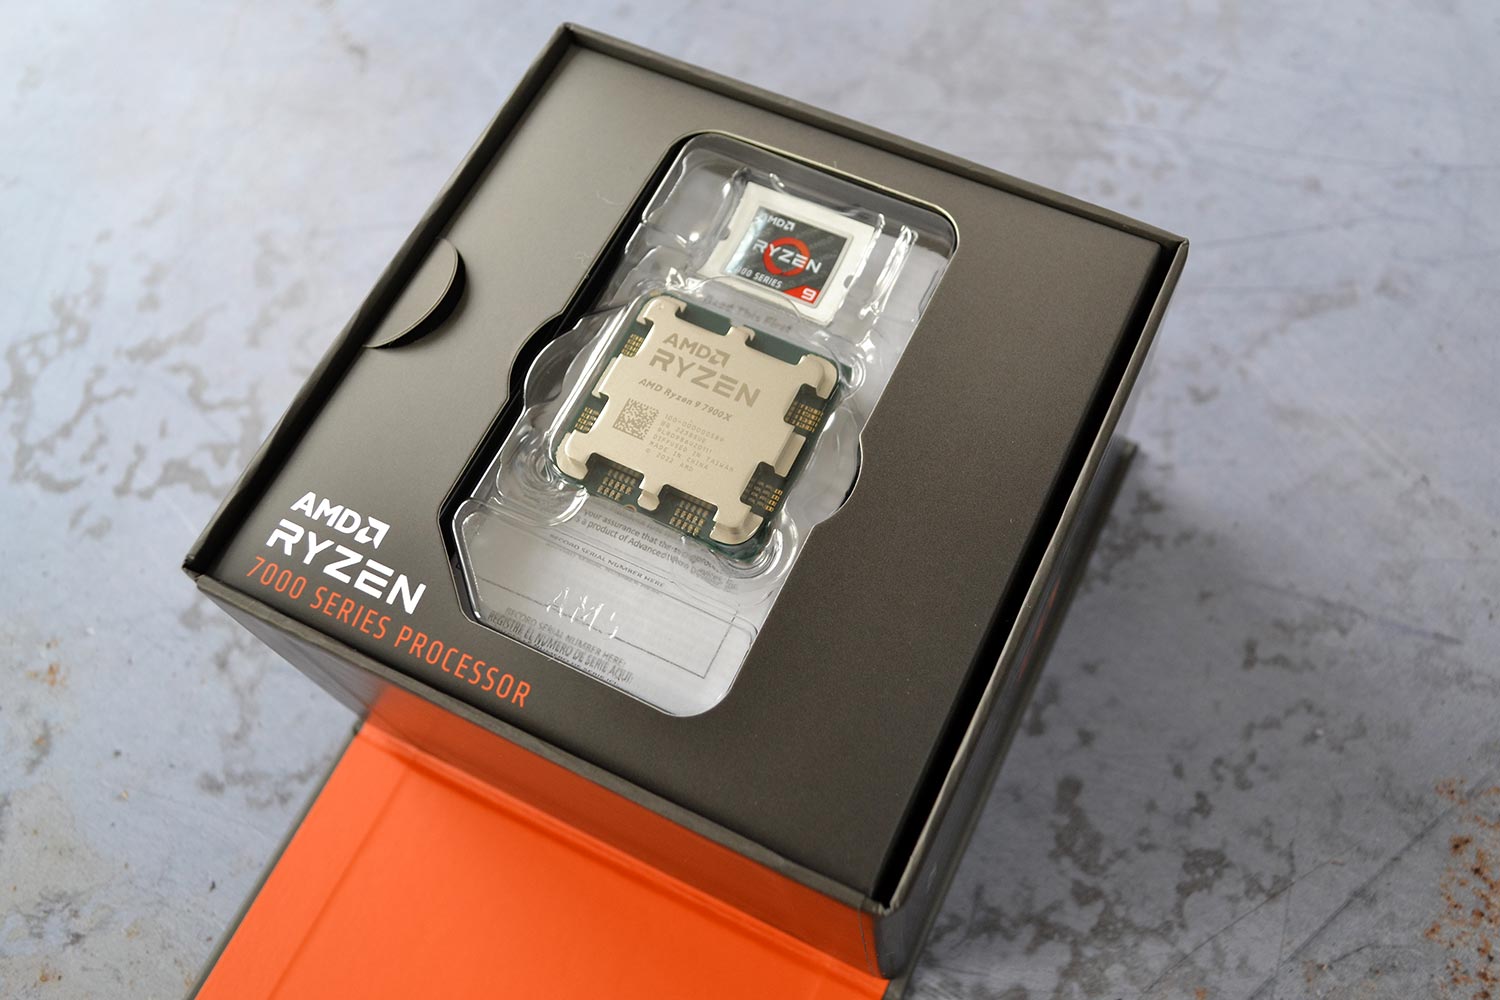 The AMD Ryzen 9 7900X CPU sitting in the retail box.